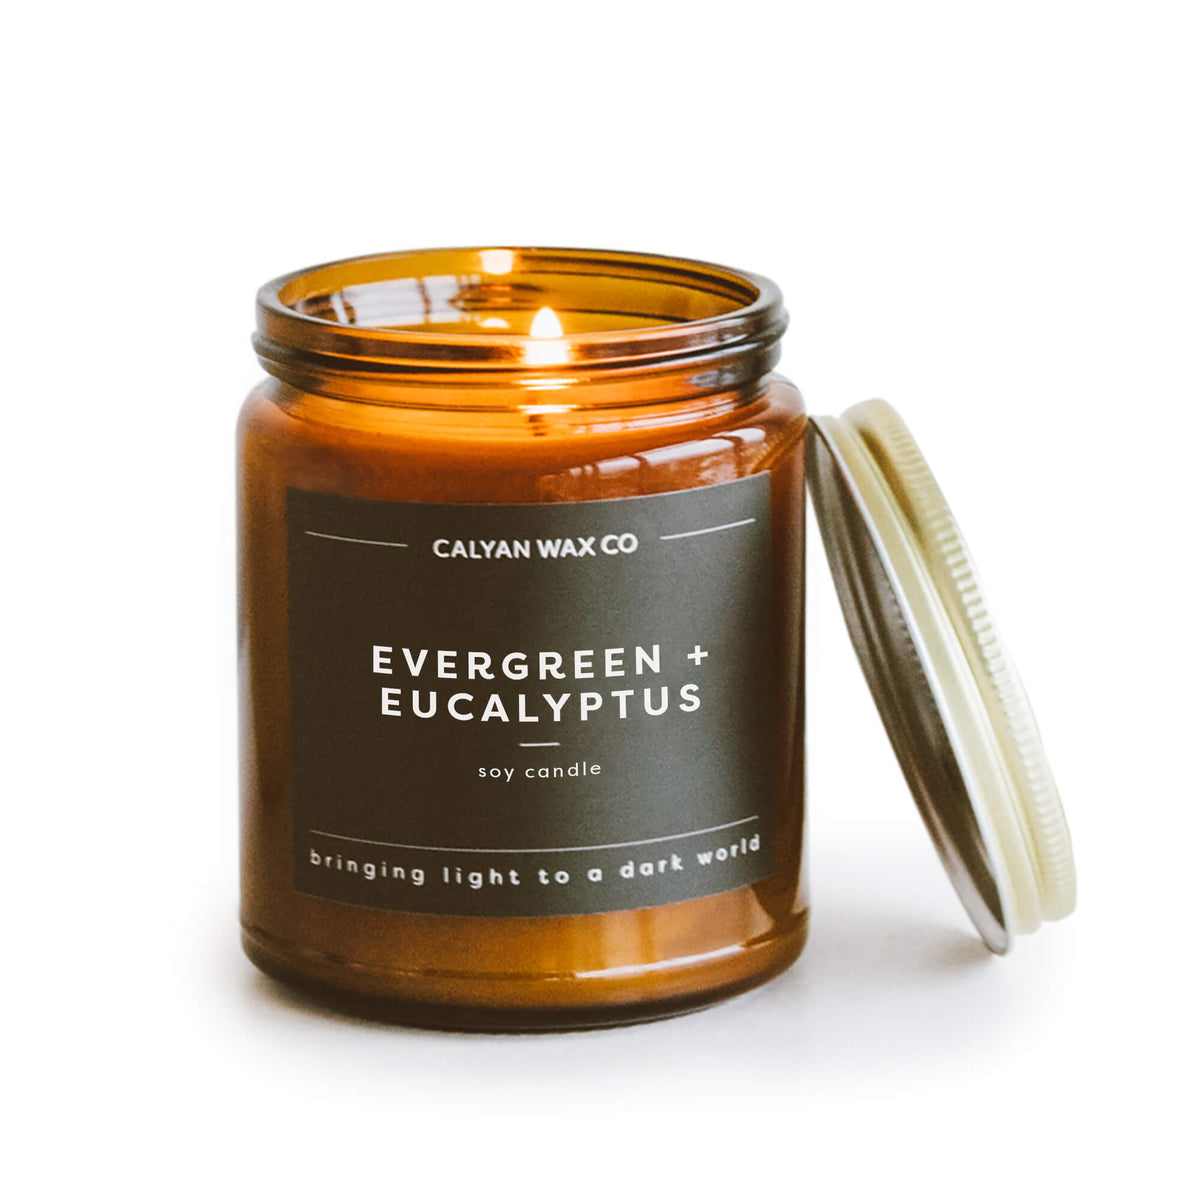 Evergreen + Eucalyptus Soy Candle in an Amber Jar - Calyan Wax Co.